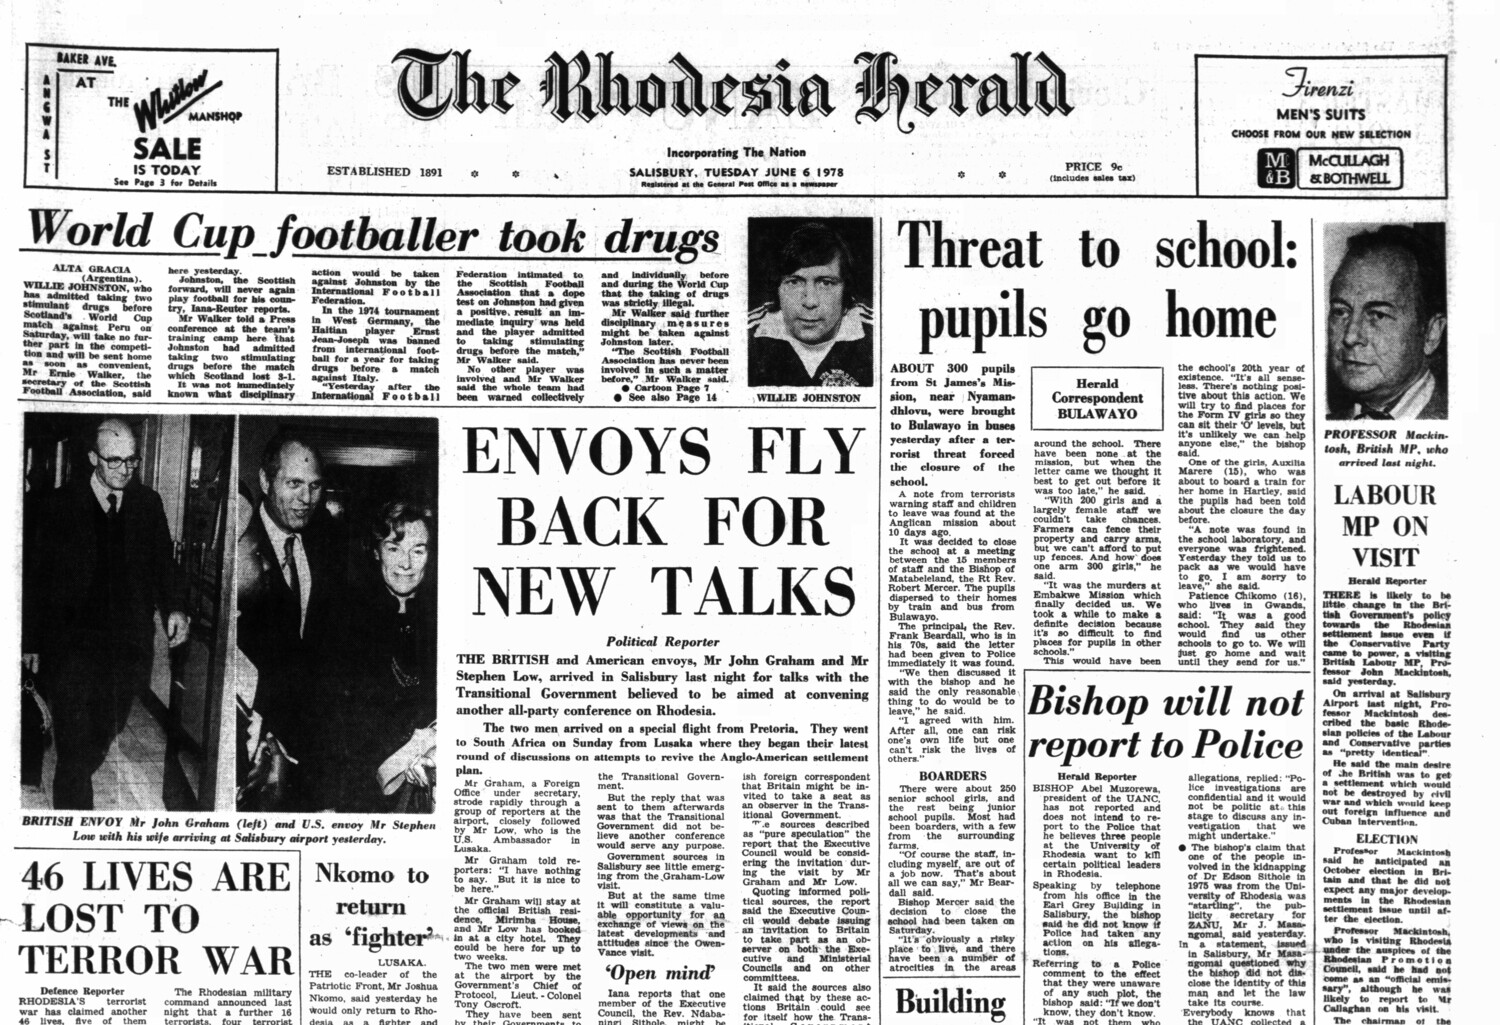 Rhodesia Herald - 6 June 1978